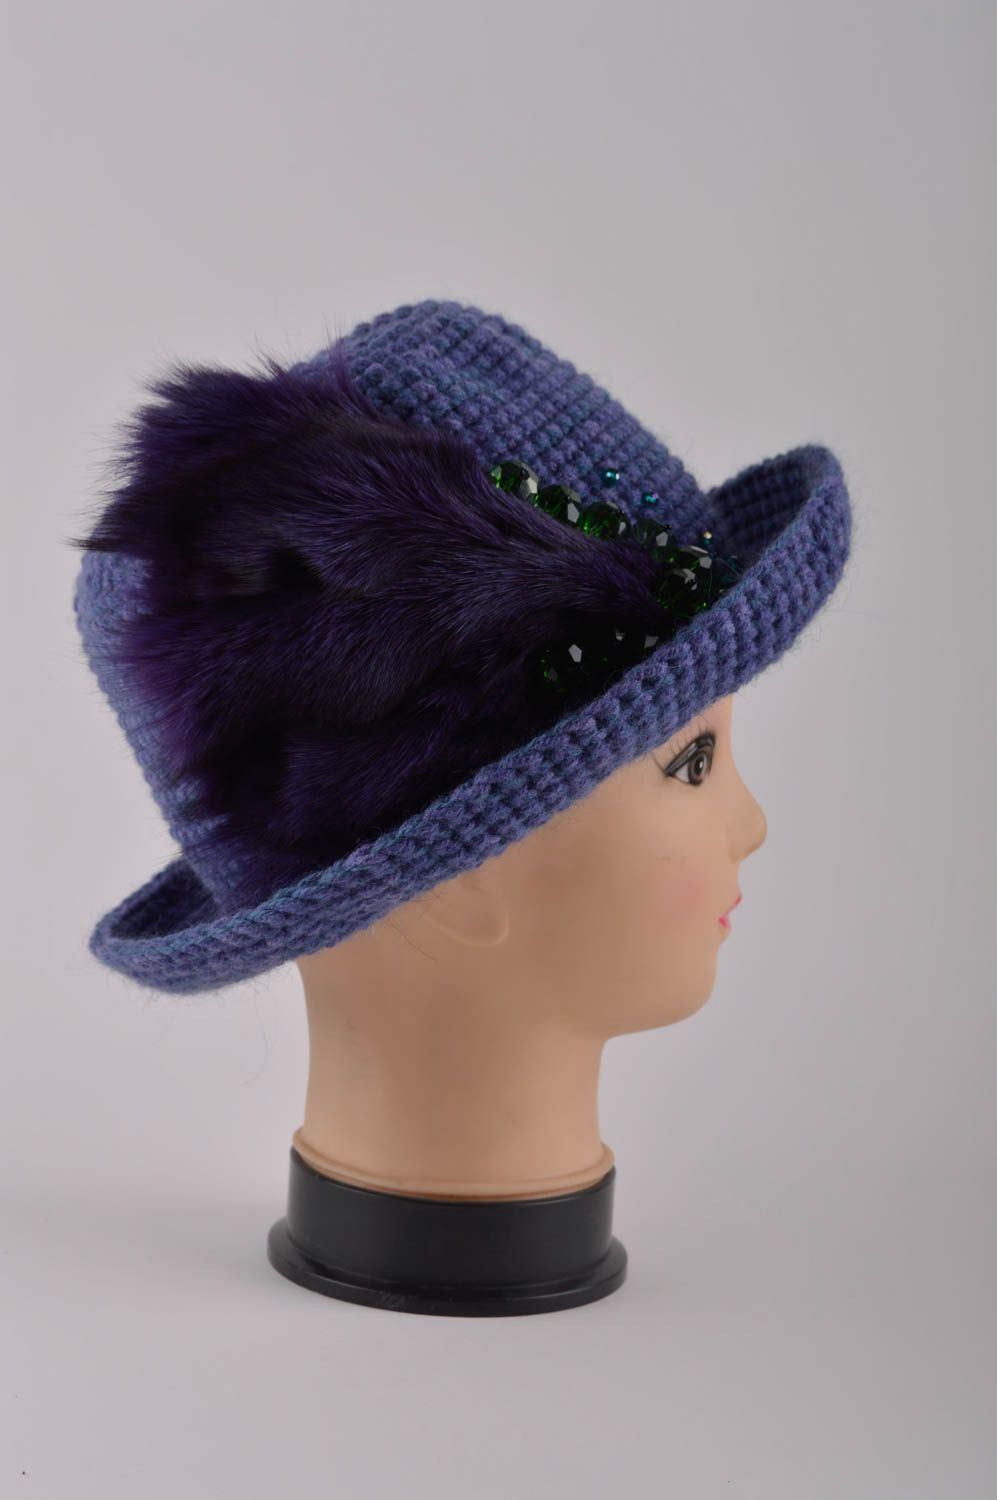 Handmade designer hat ladies hat crochet hat fashion accessories gifts for women photo 4